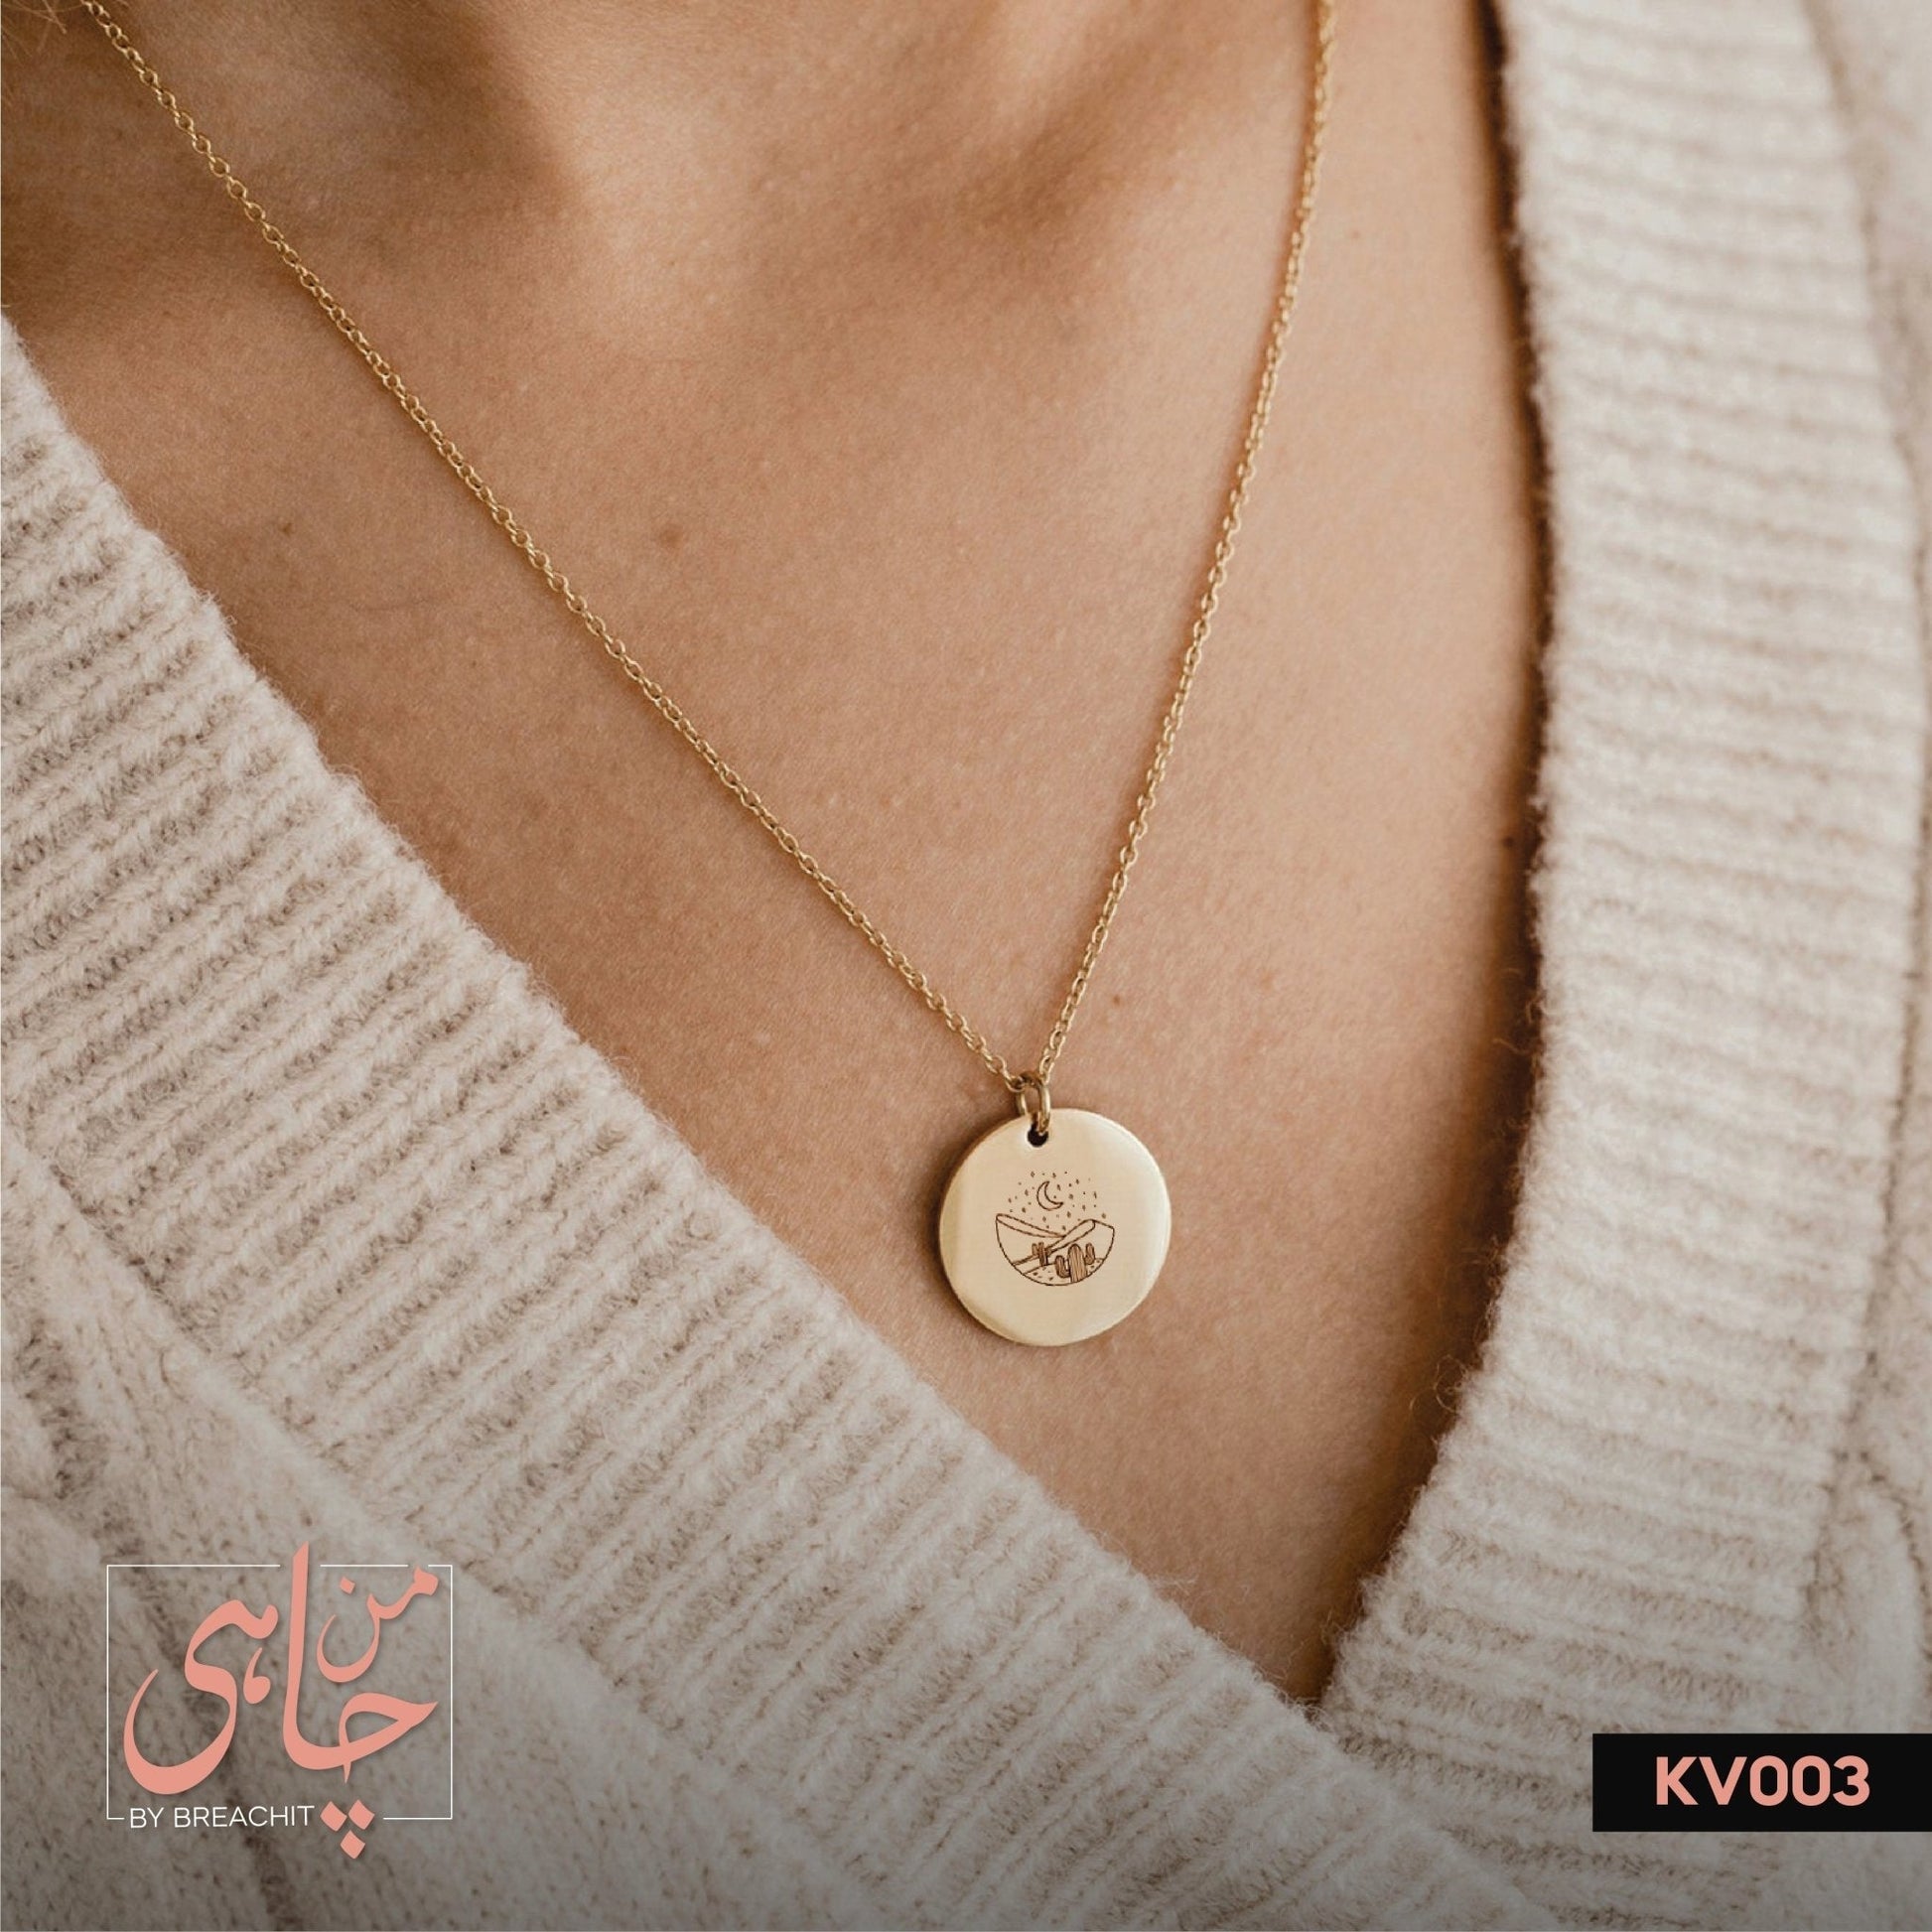 KV003 Moon Tumblr Necklace - BREACHIT